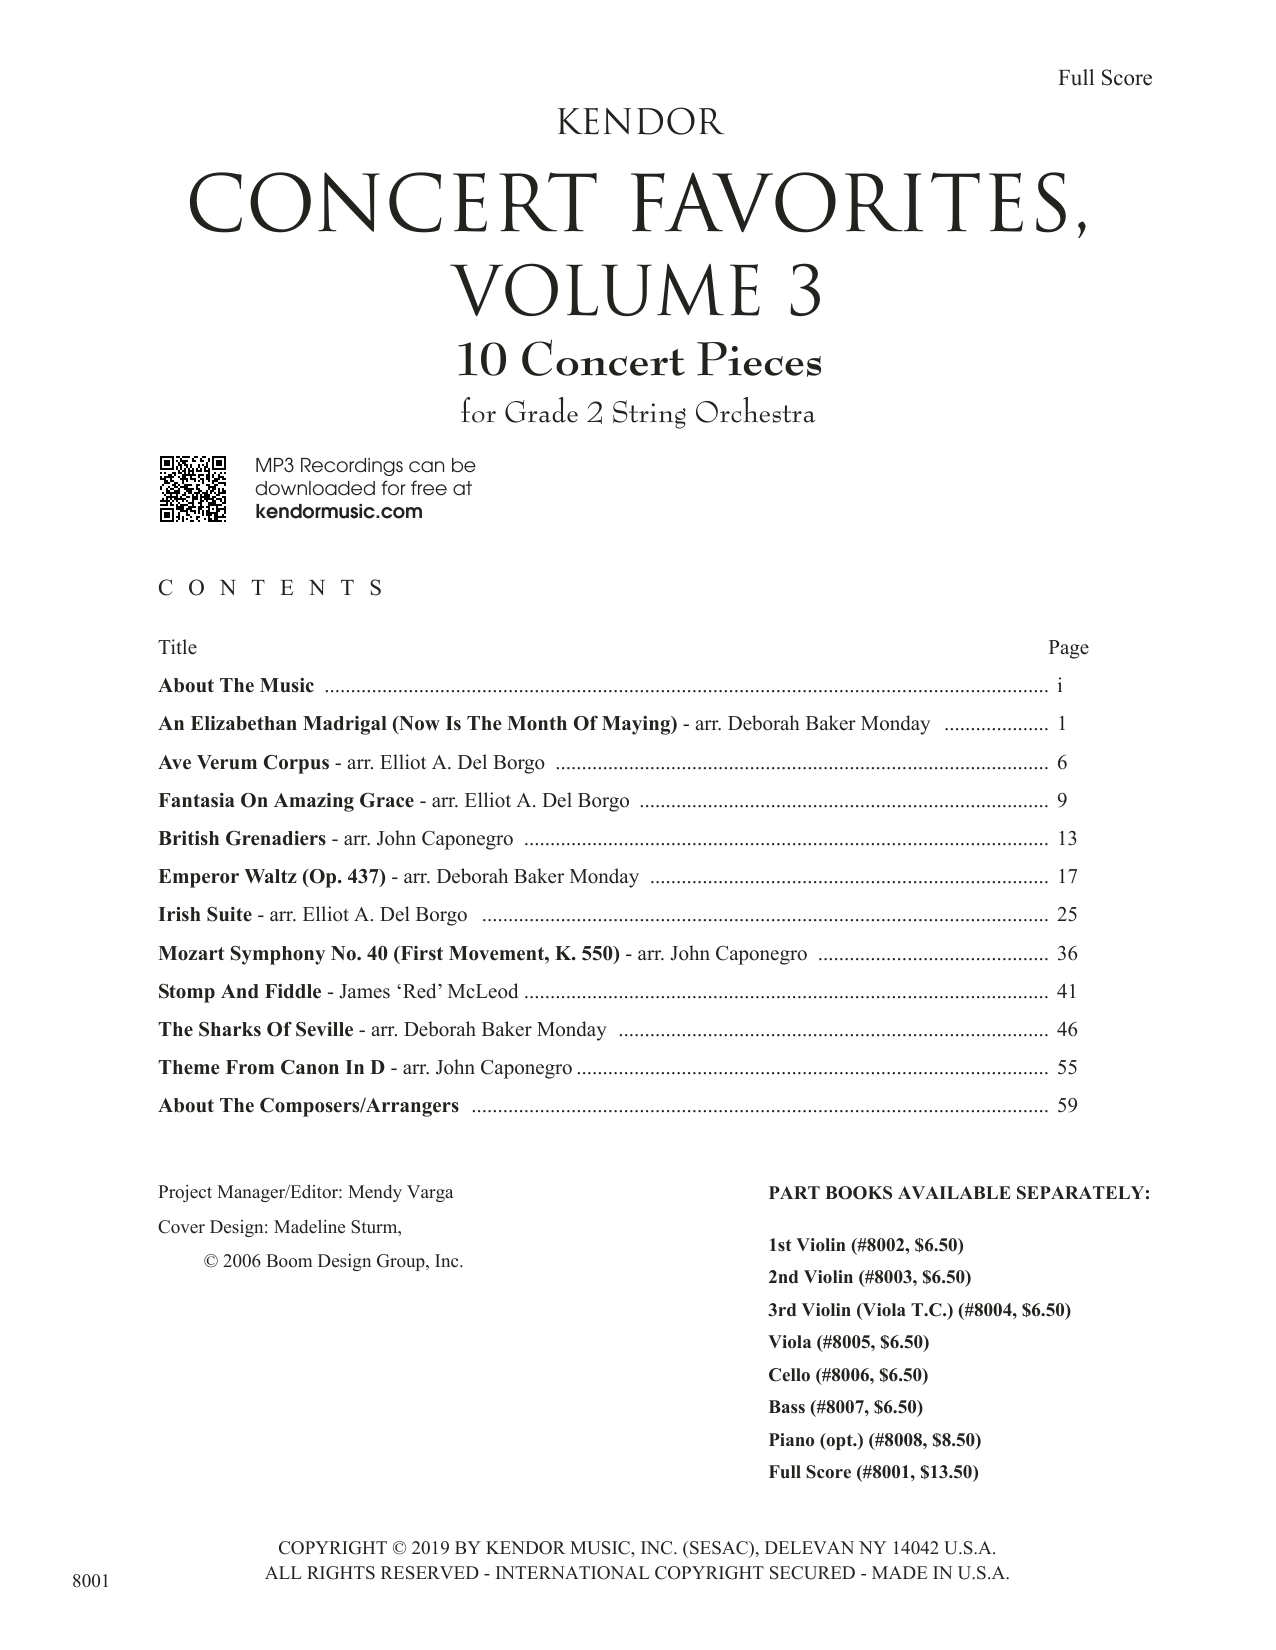 Download Various Kendor Concert Favorites, Volume 3 - Fu Sheet Music